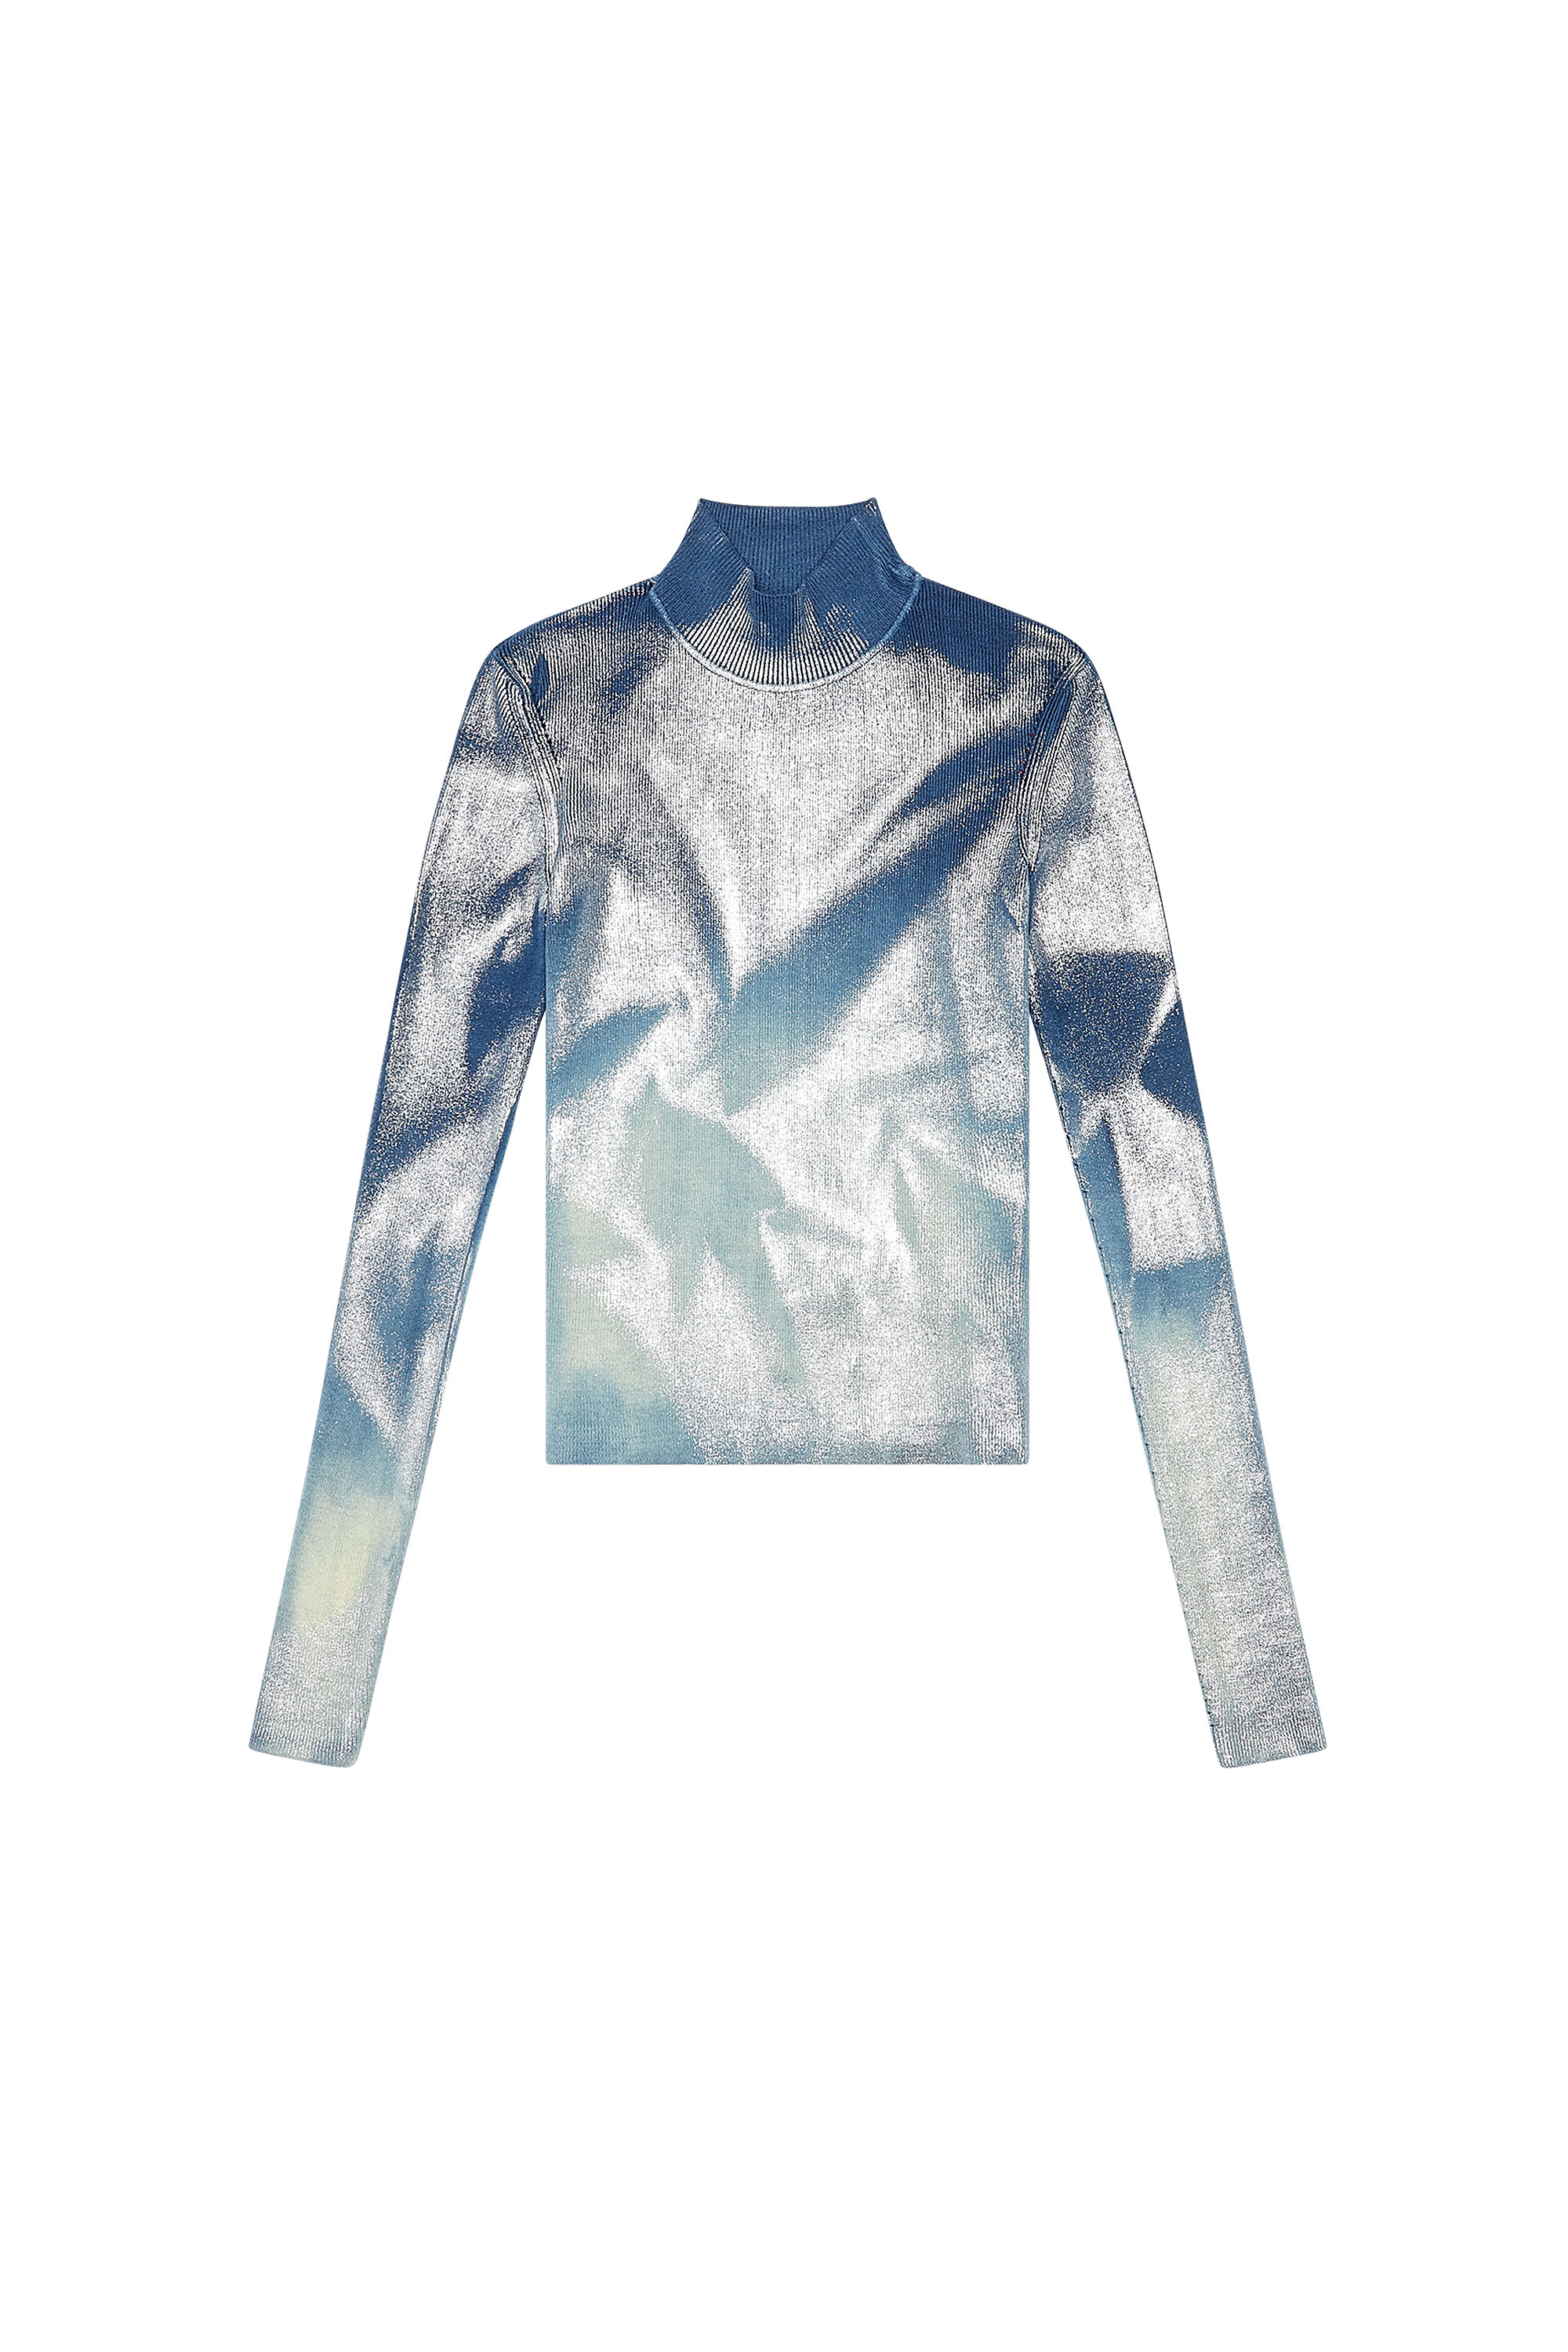 Diesel - M-ILEEN, Woman Knit top with metallic effects in Blue - Image 5